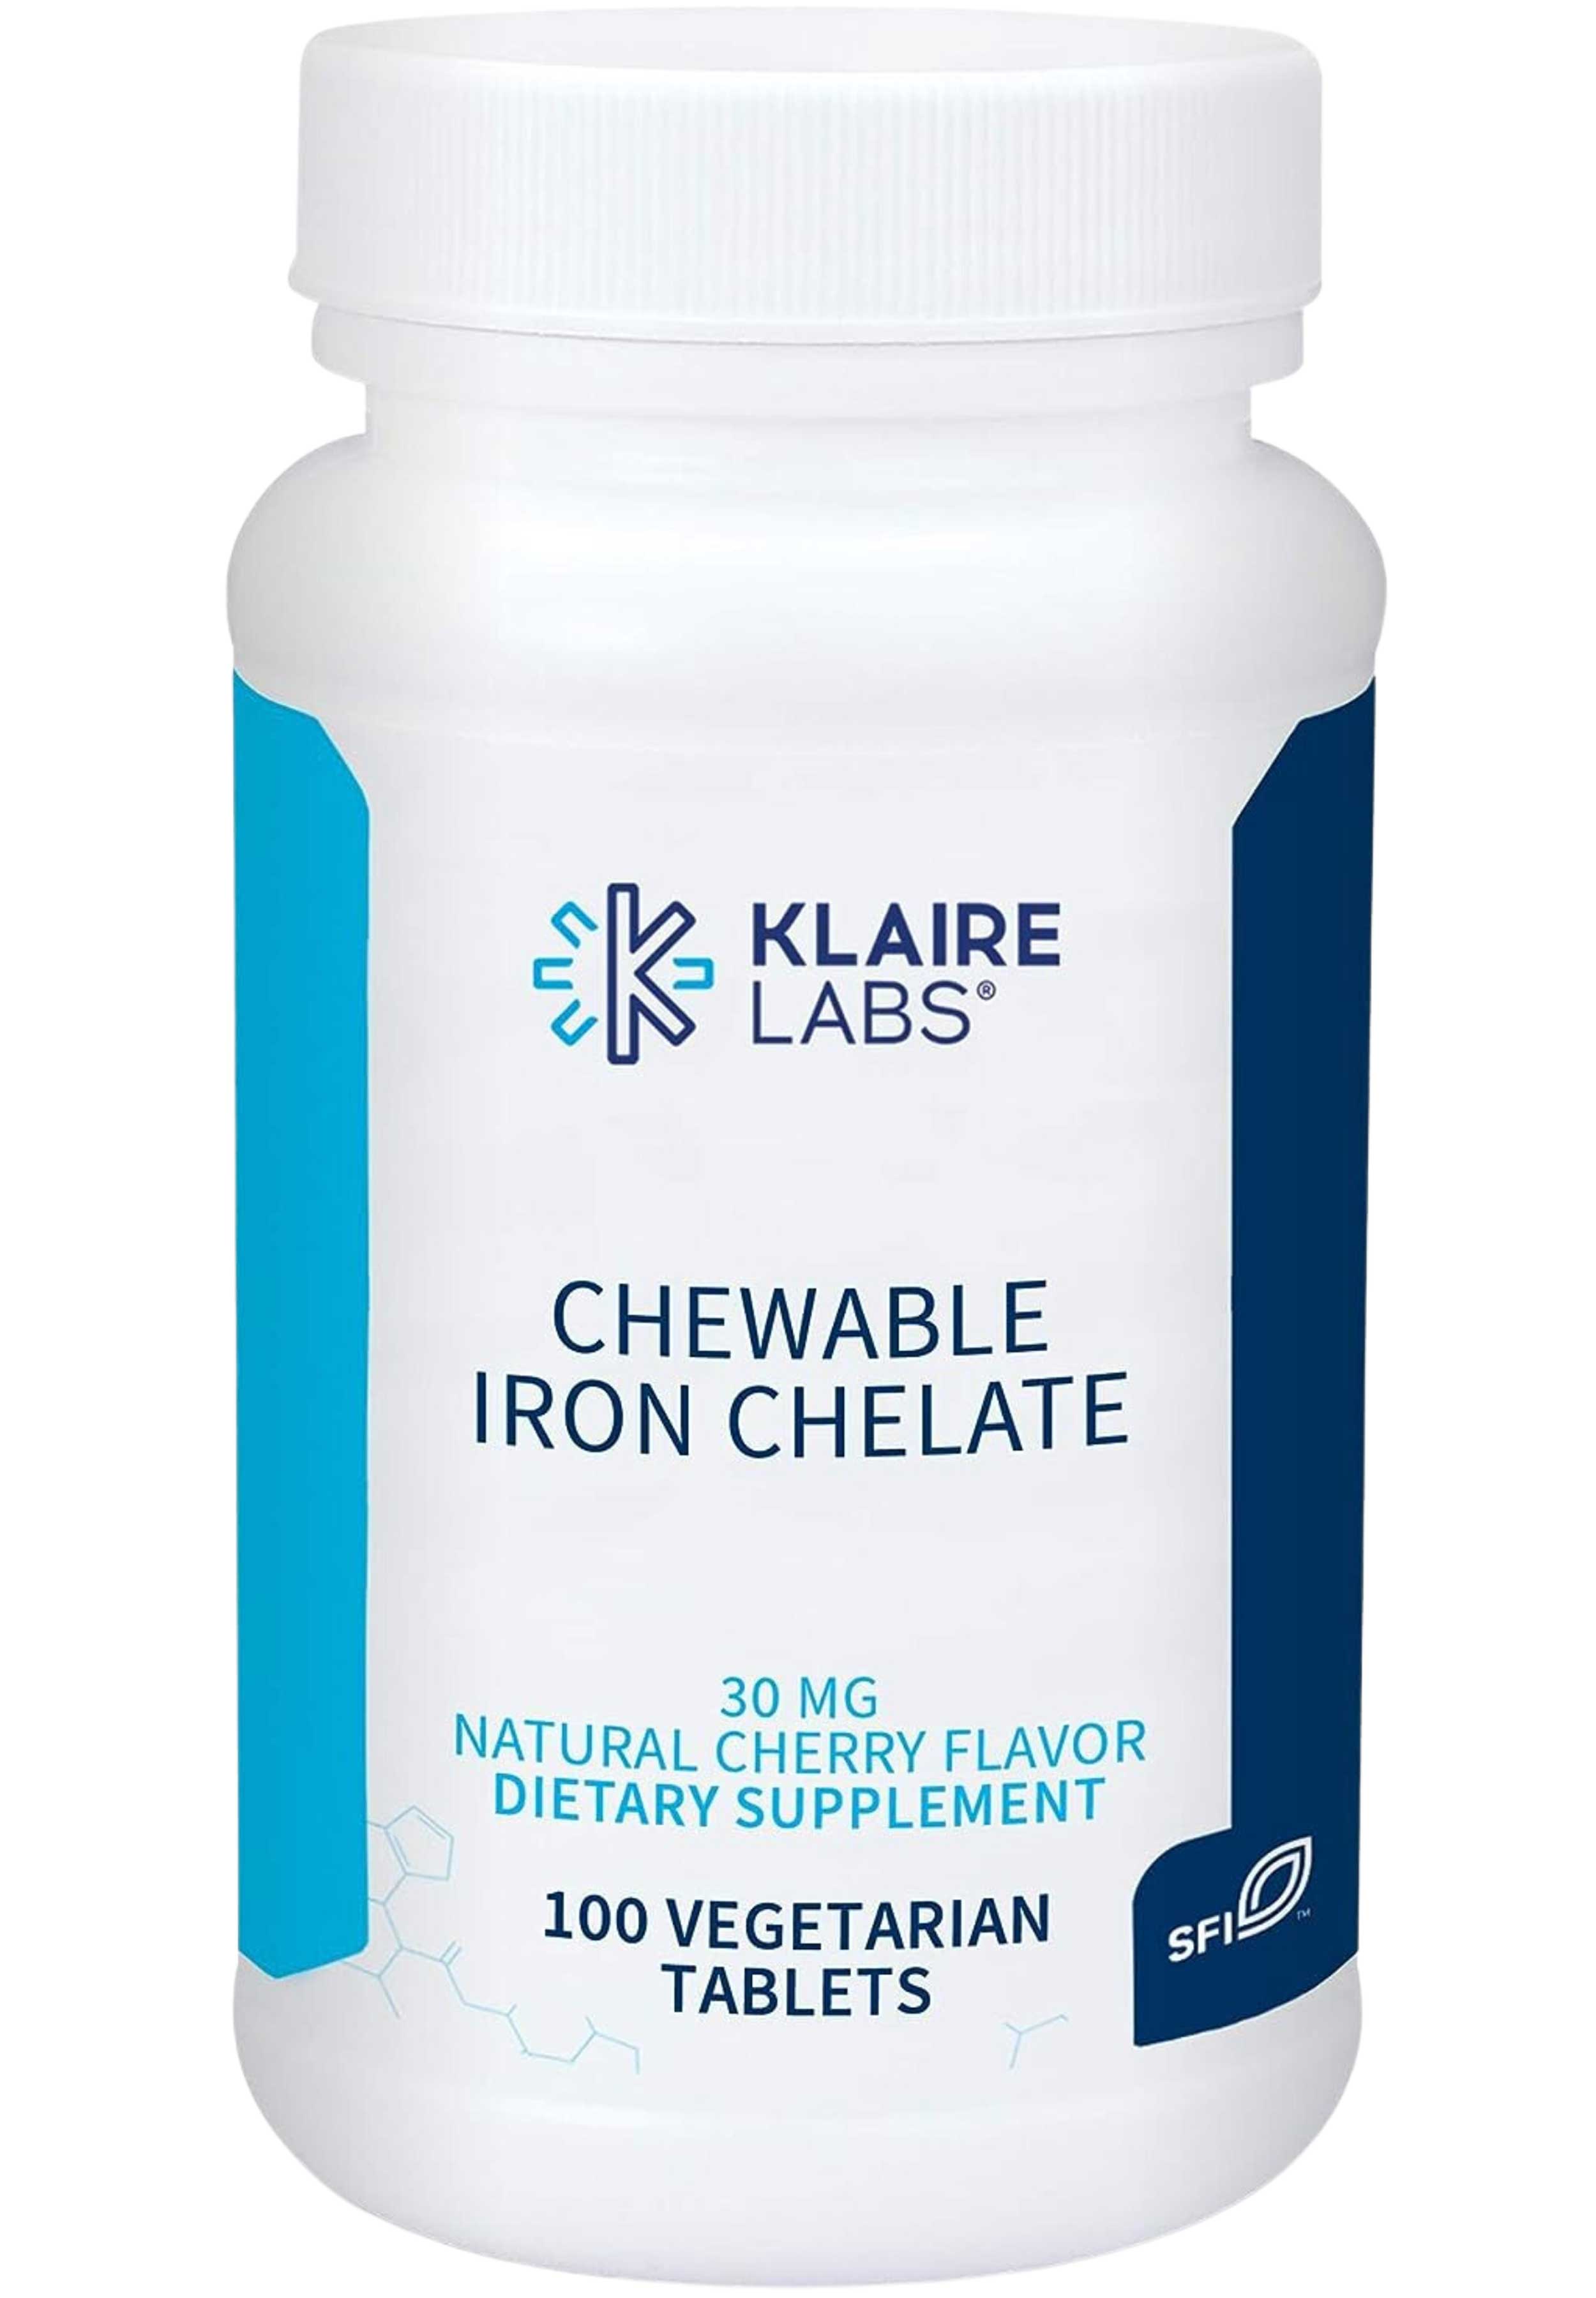 Klaire Labs Chewable Iron Chelate 30 mg